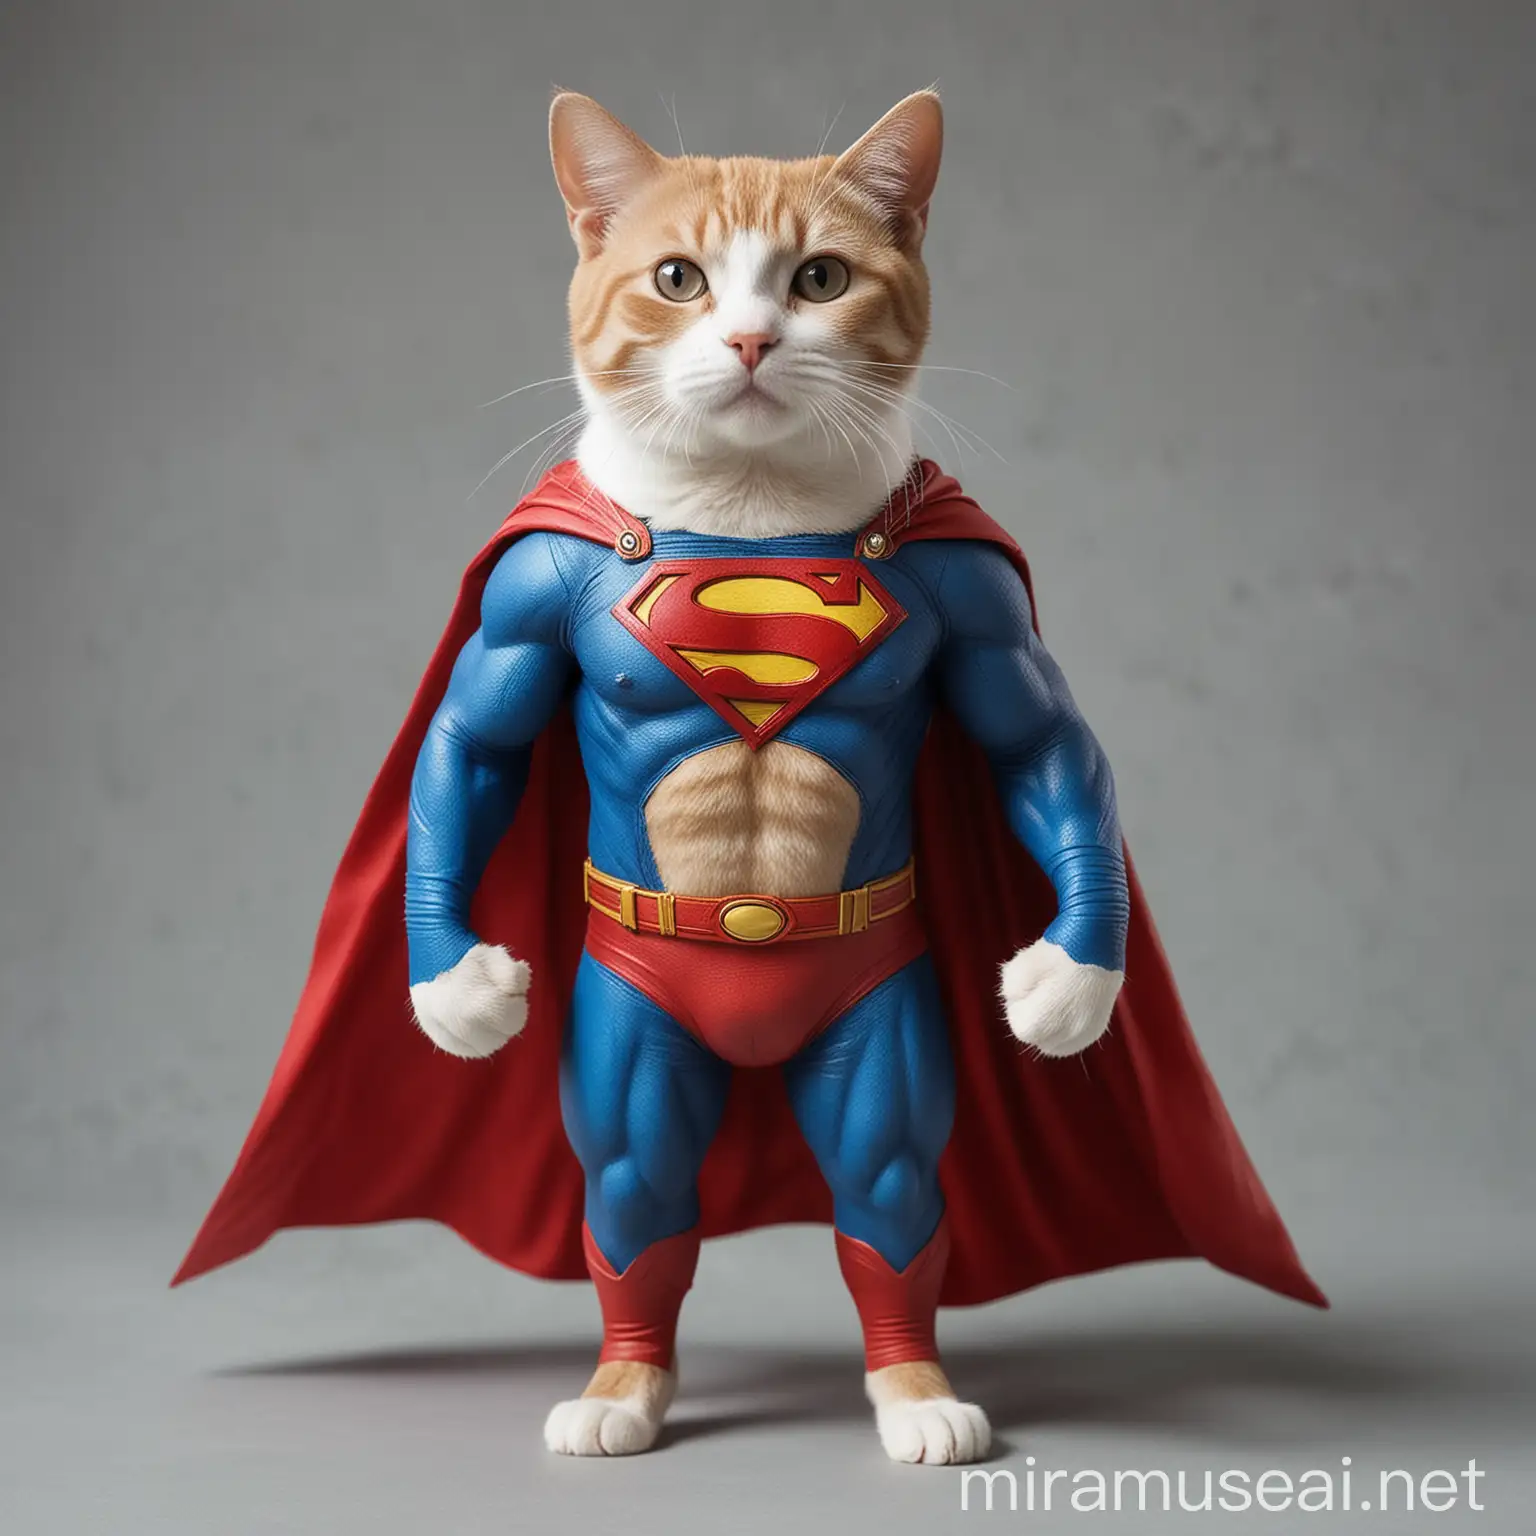 Majestic Cat Standing Tall in Superhero Pose